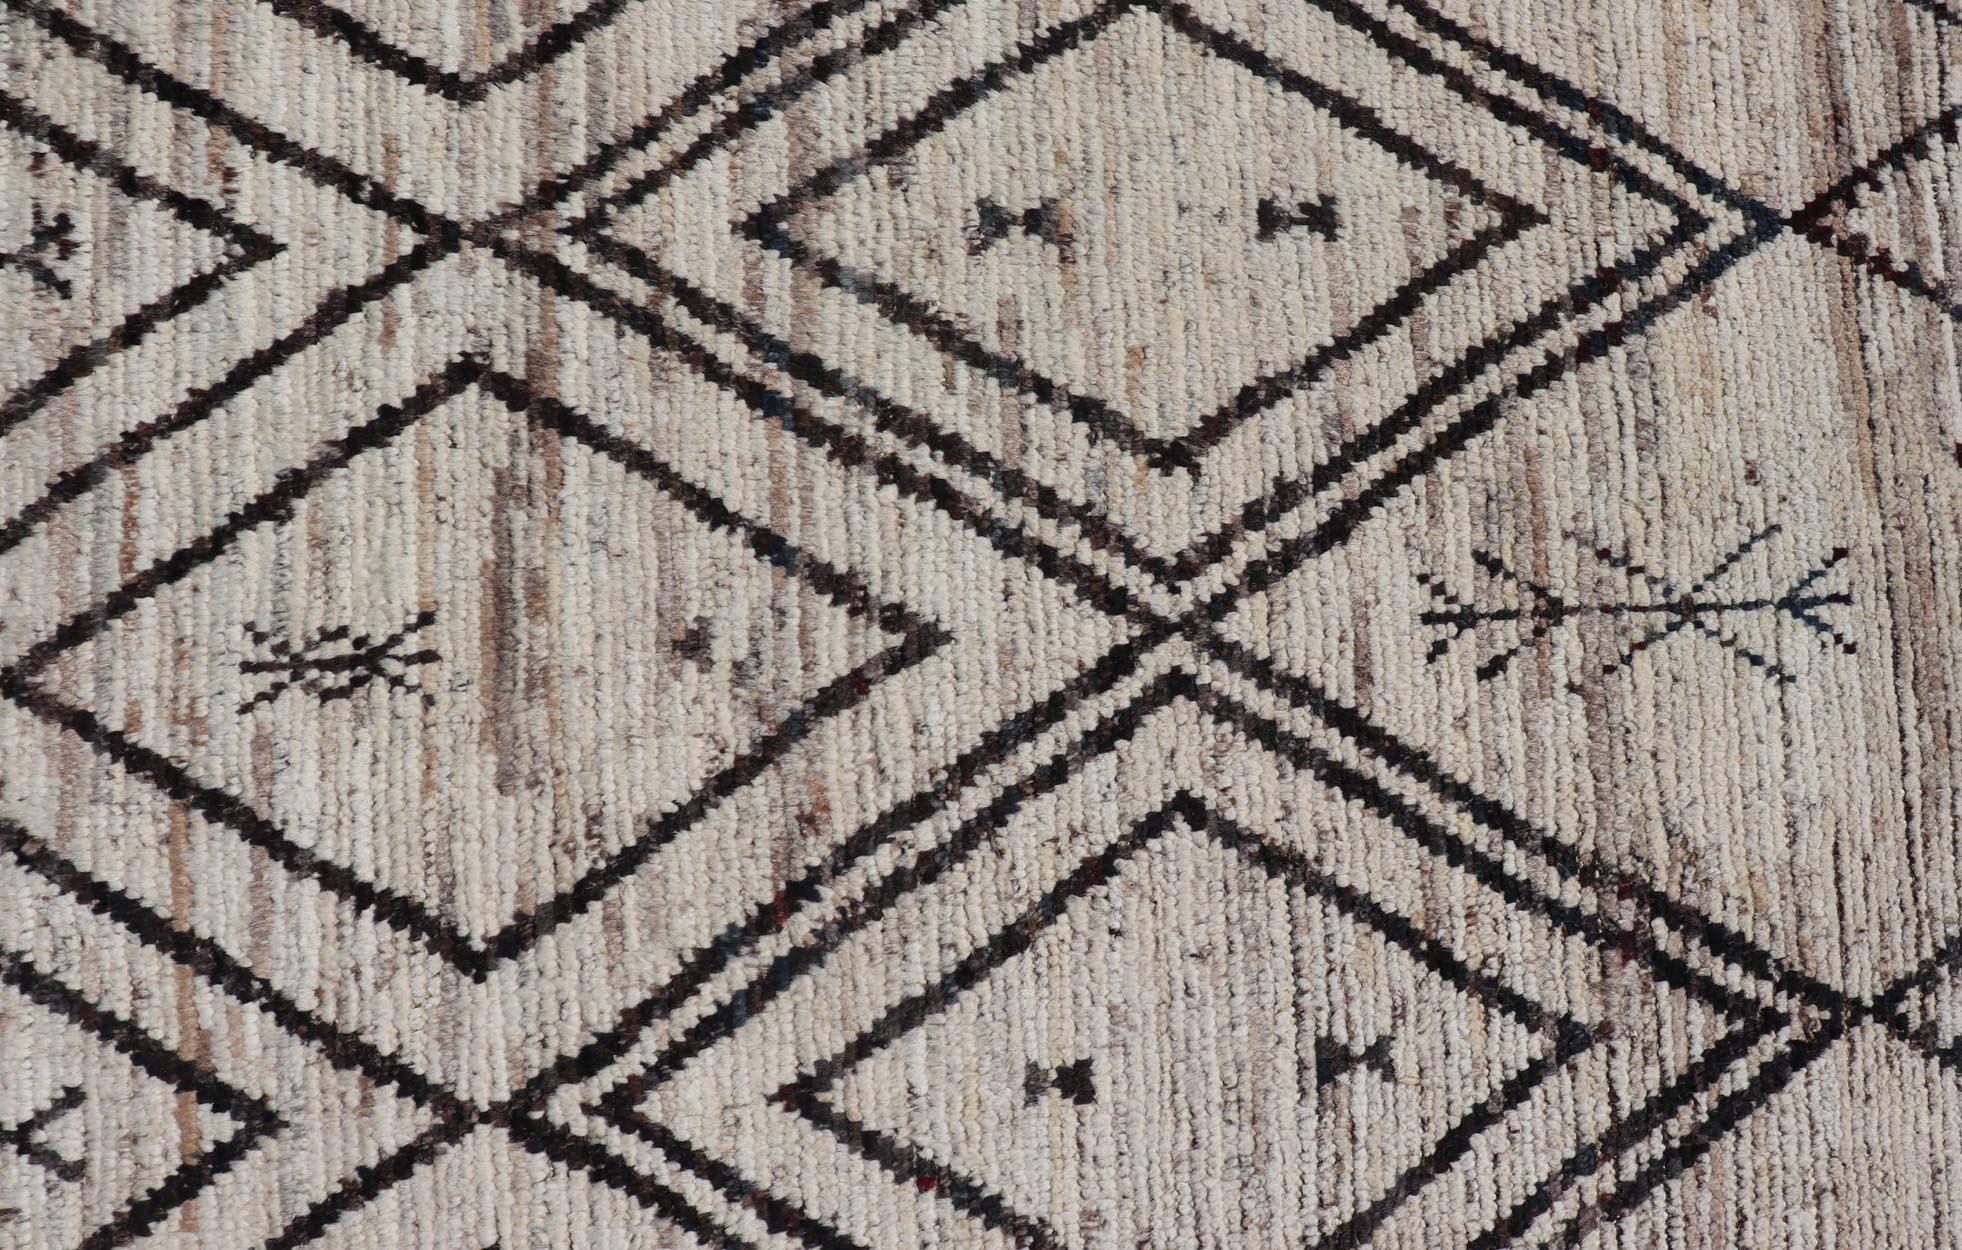  Tribal Moroccan Modern Rug in Wool with Geometric Diamond Design  For Sale 1